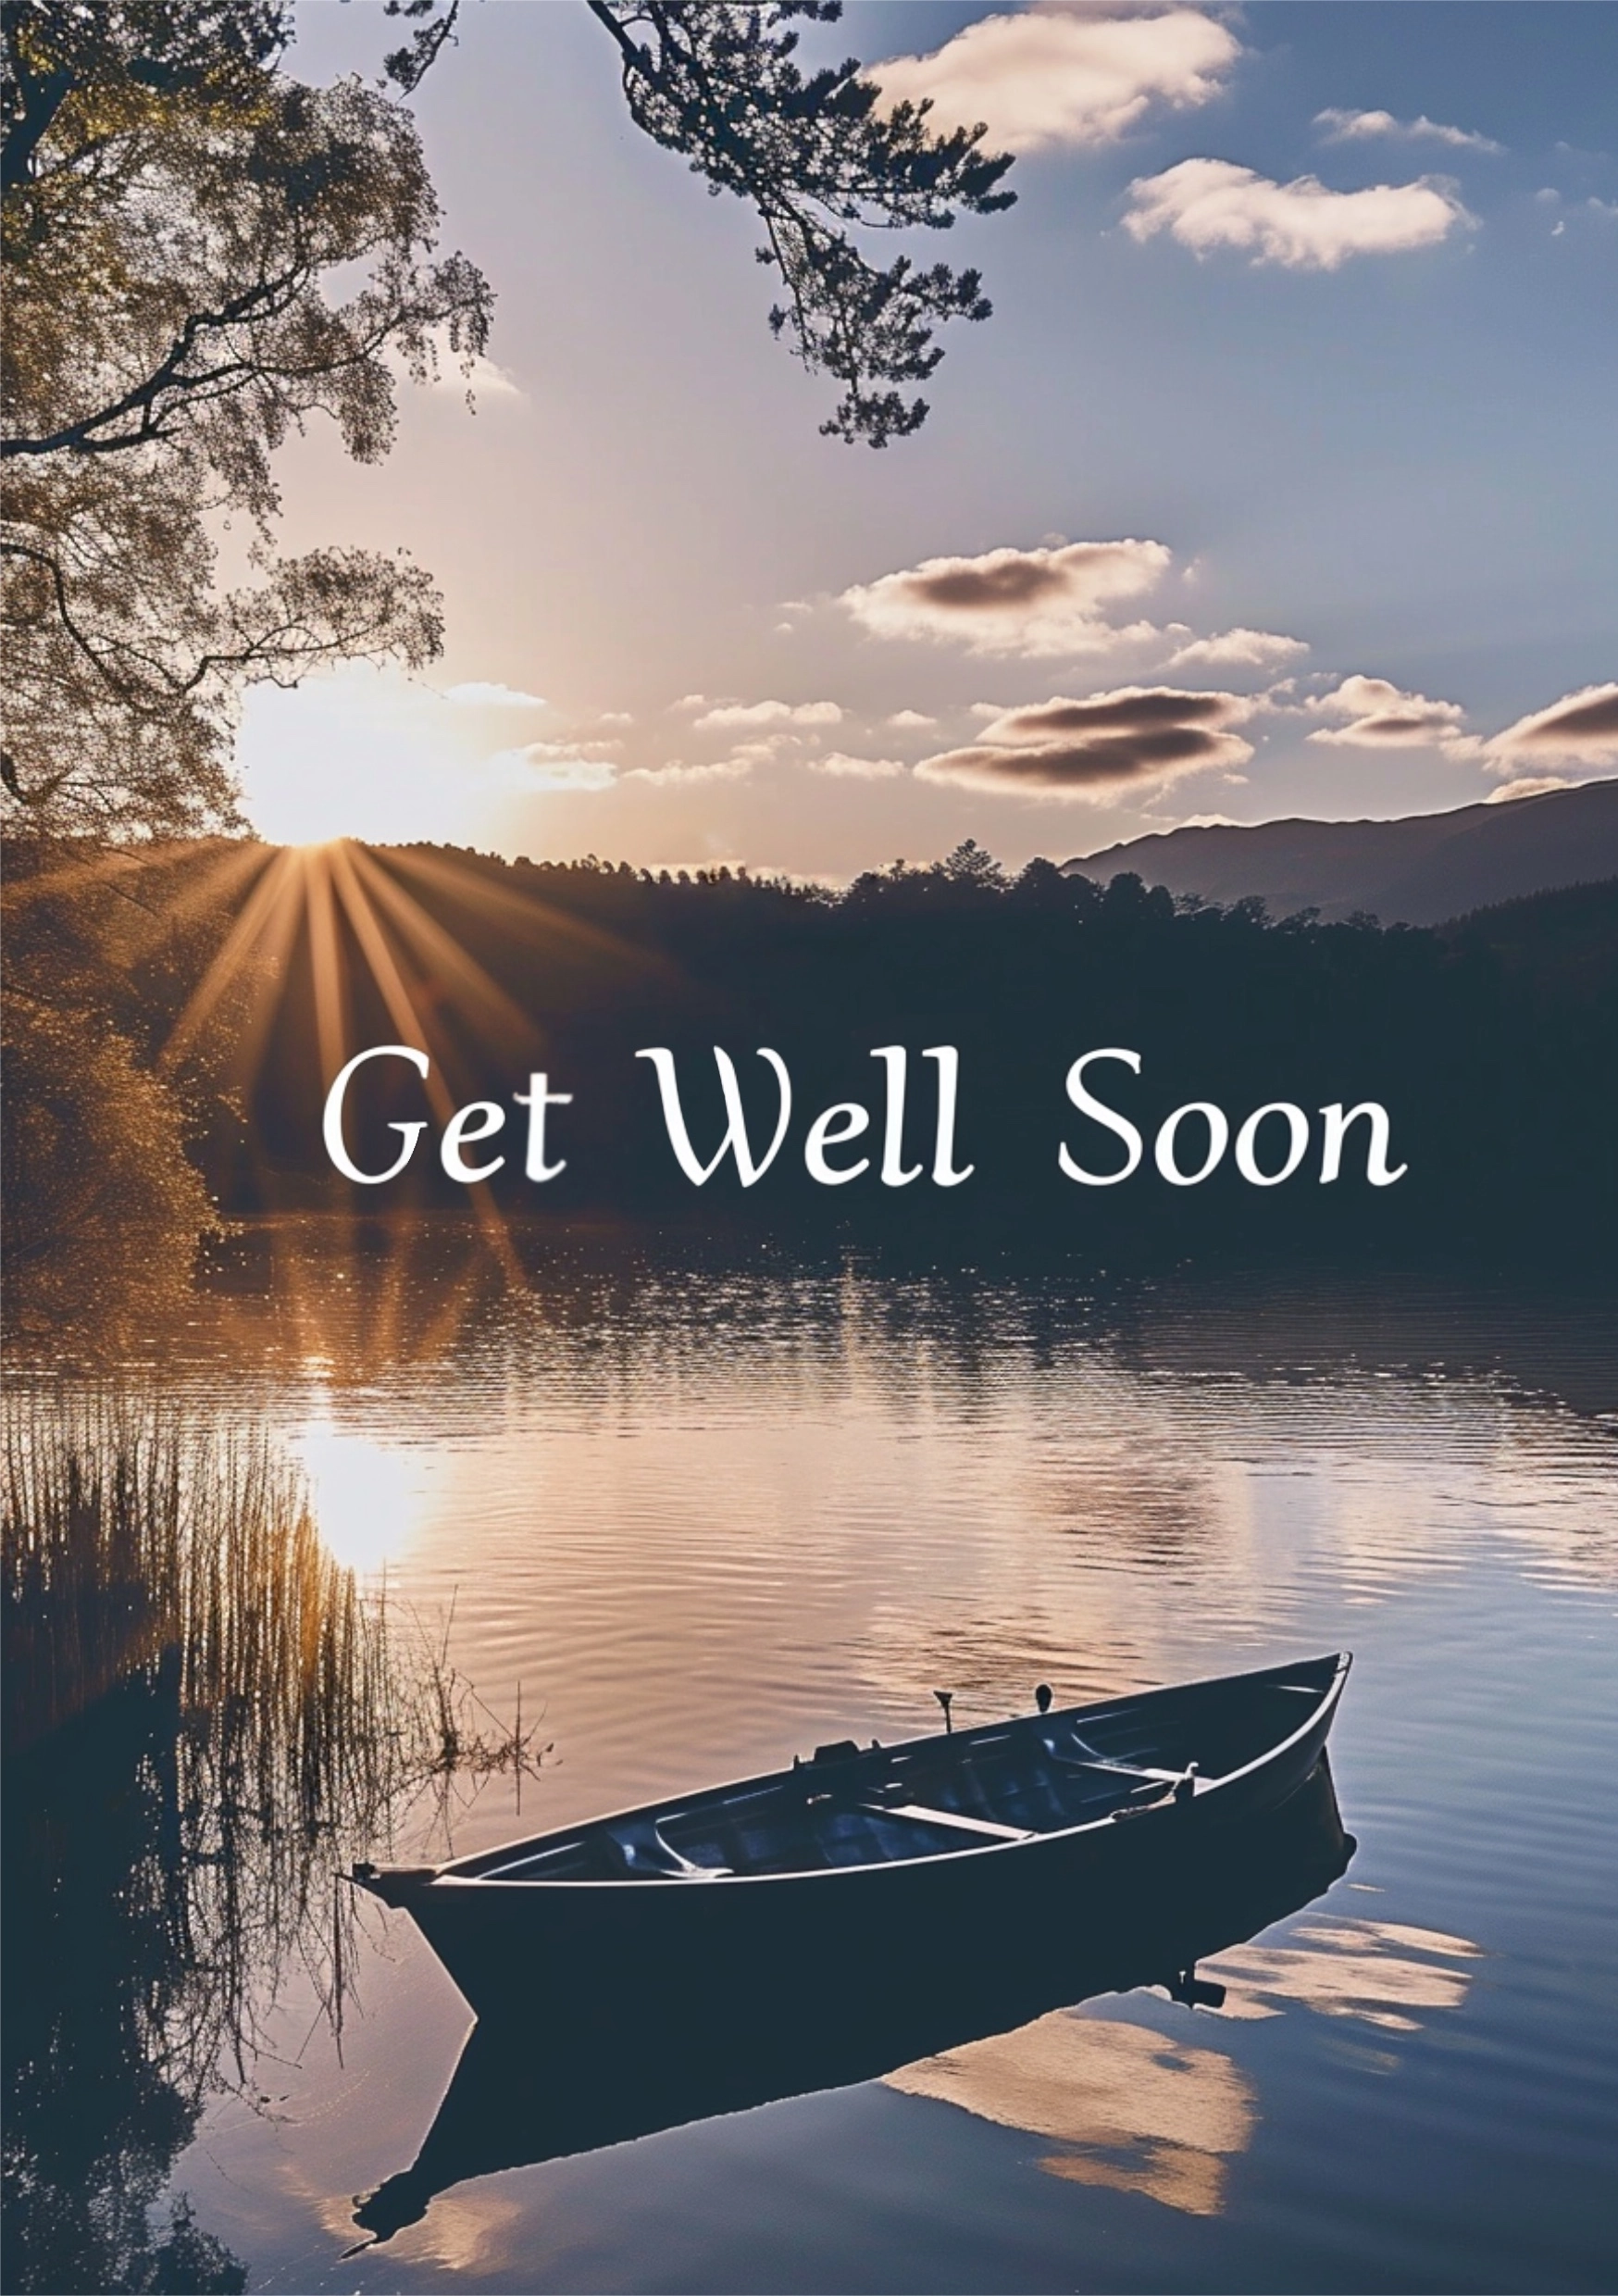 Portada para una tarjeta de mejórate pronto el mensaje 'Get well soon' sobre un lago al atardecer